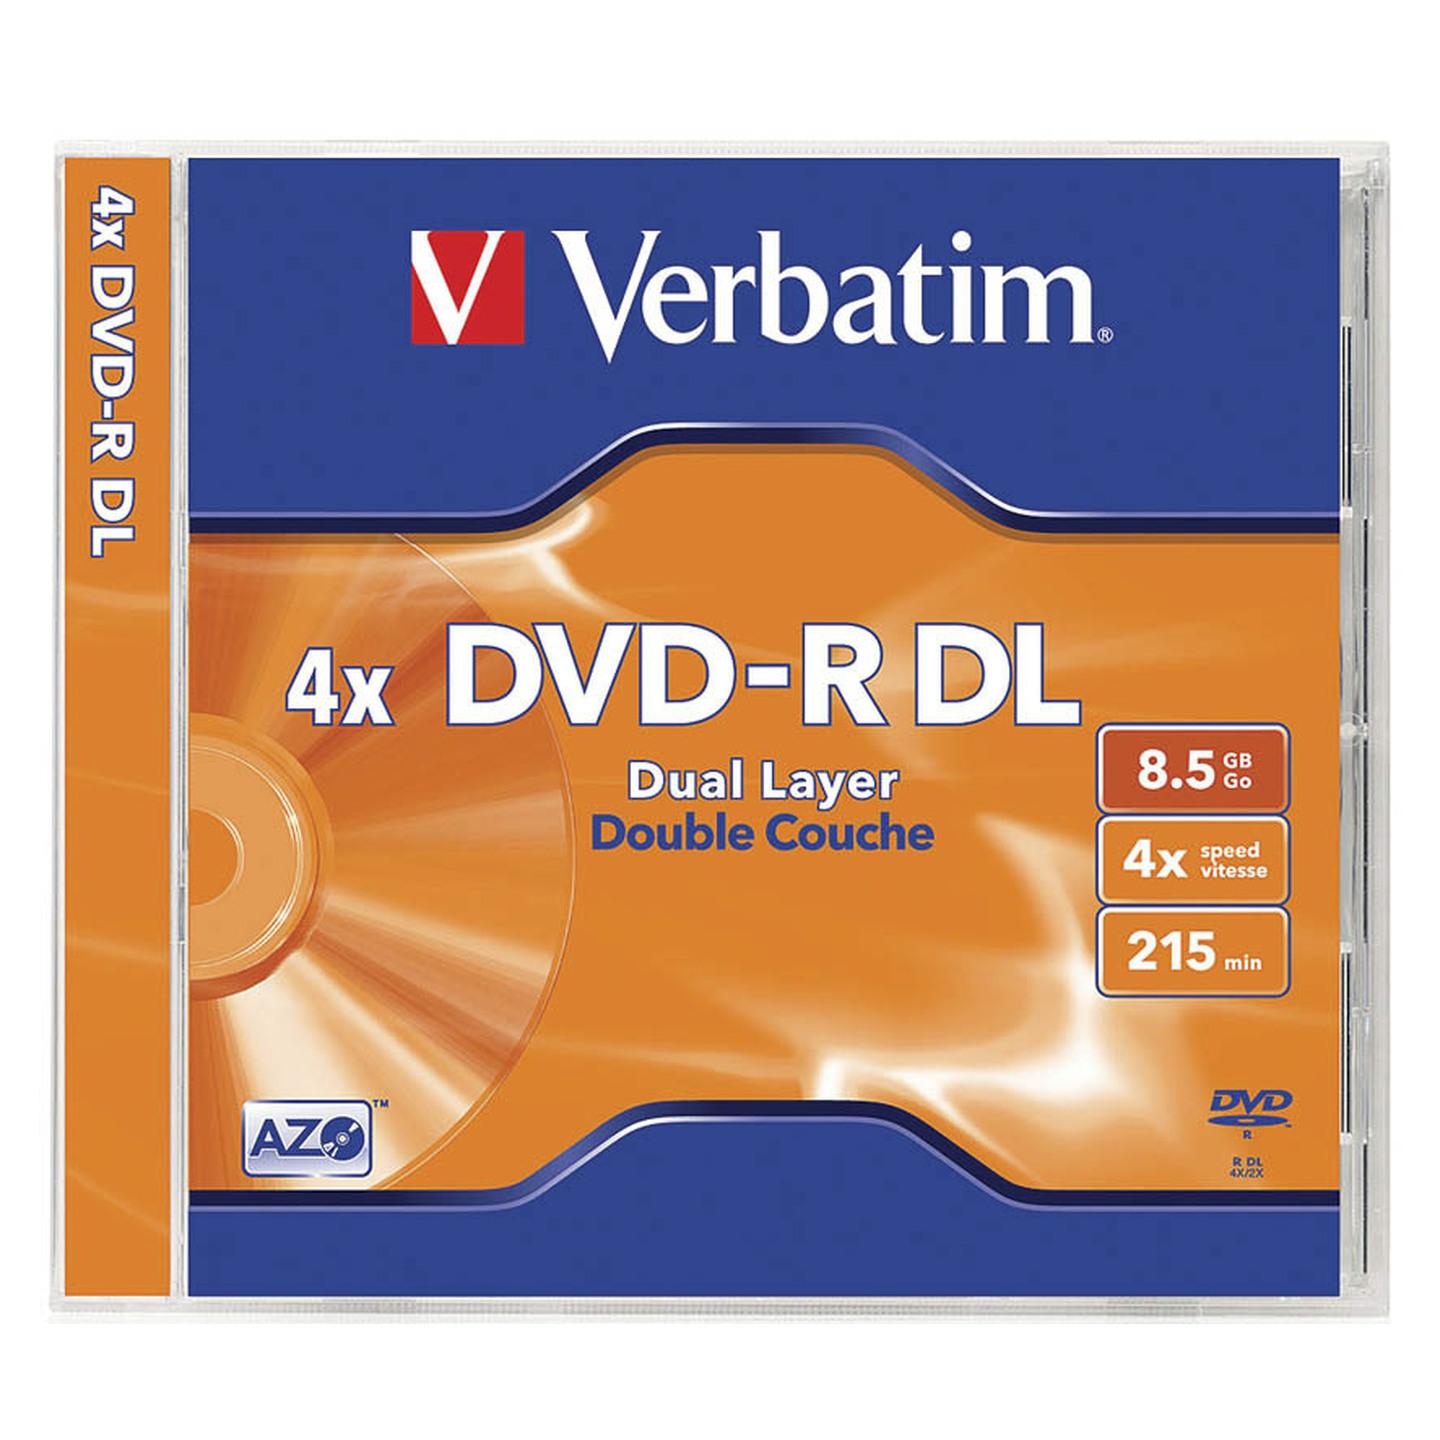 Verbatim DataLifePlus Azo DVD-R DL 8.5GB Jewel Case Singles 4x